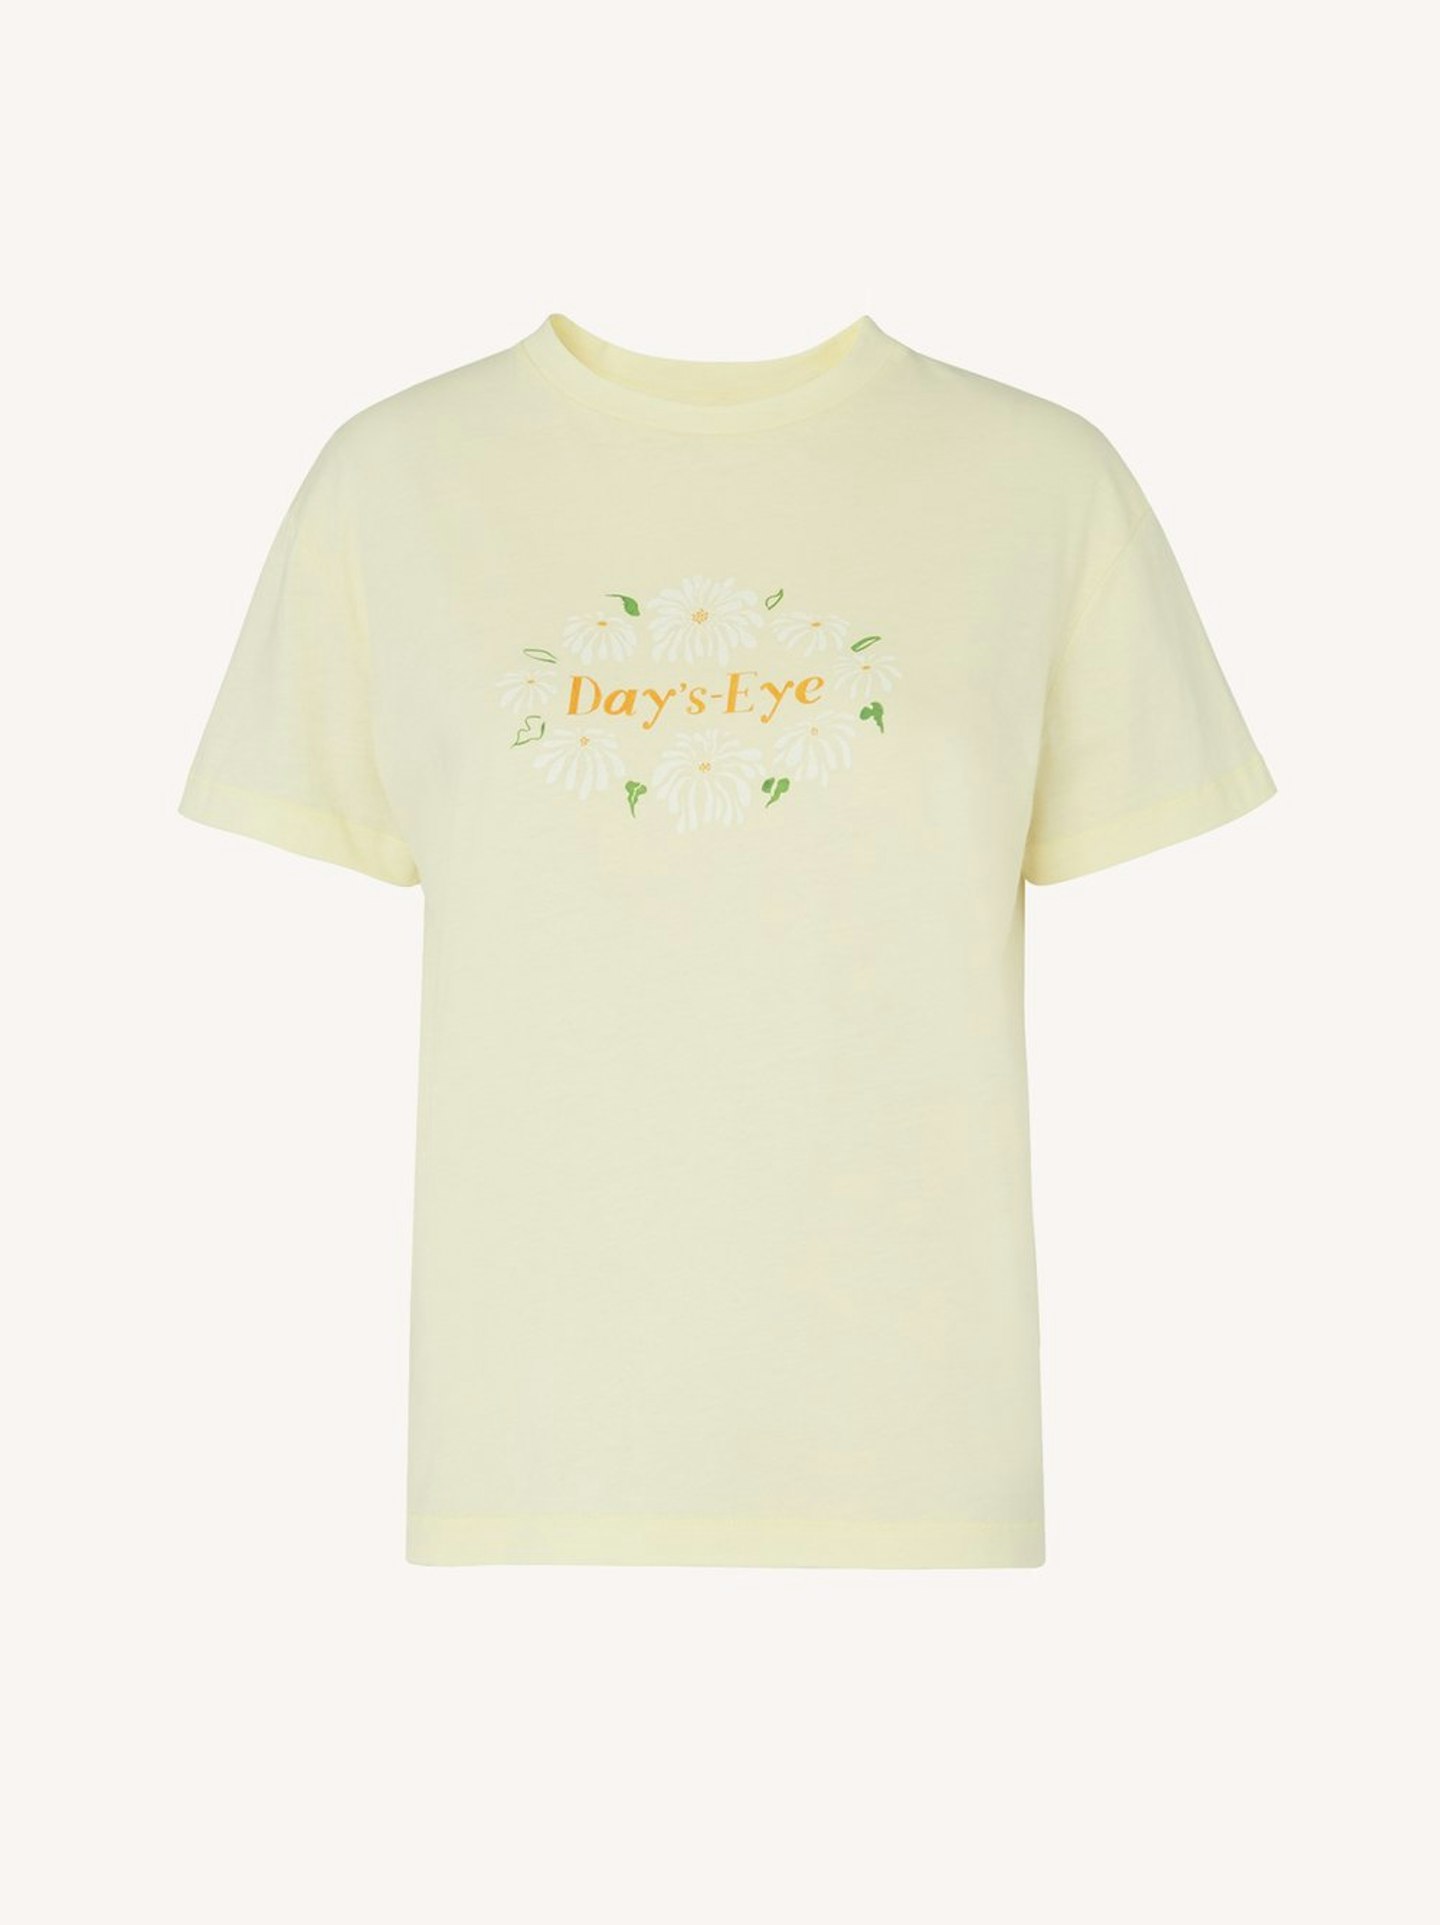 Days-Eye Yellow T-shirt, £40